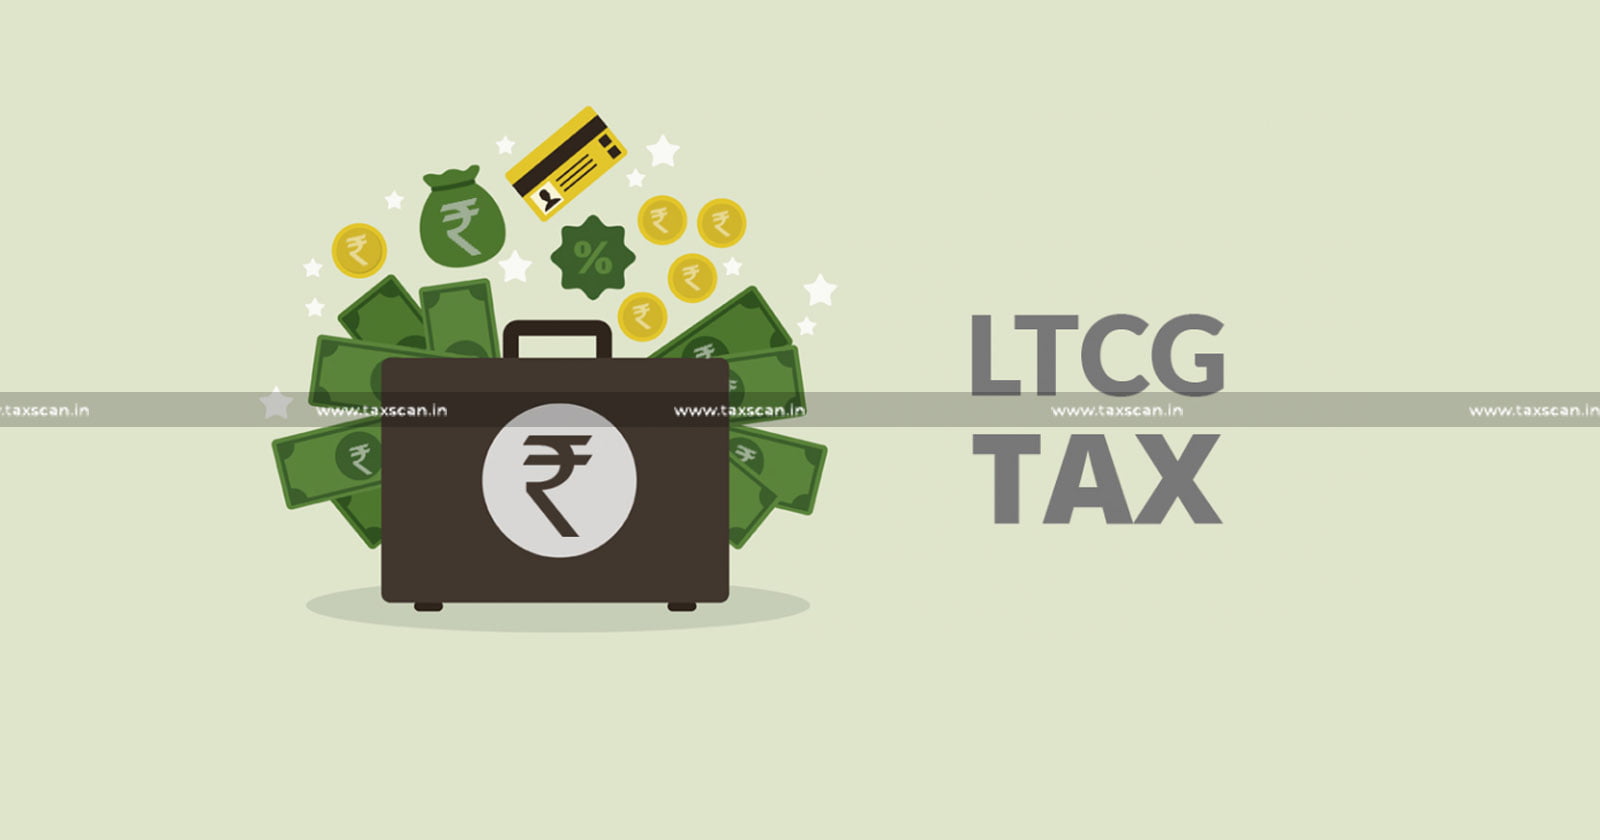 ITAT Mumbai - ITAT - Income Tax - Sale of Shares - LTCG on Shares Sale ITAT Direction - ITAT Shares Sale LTCG Evidence - Taxscan